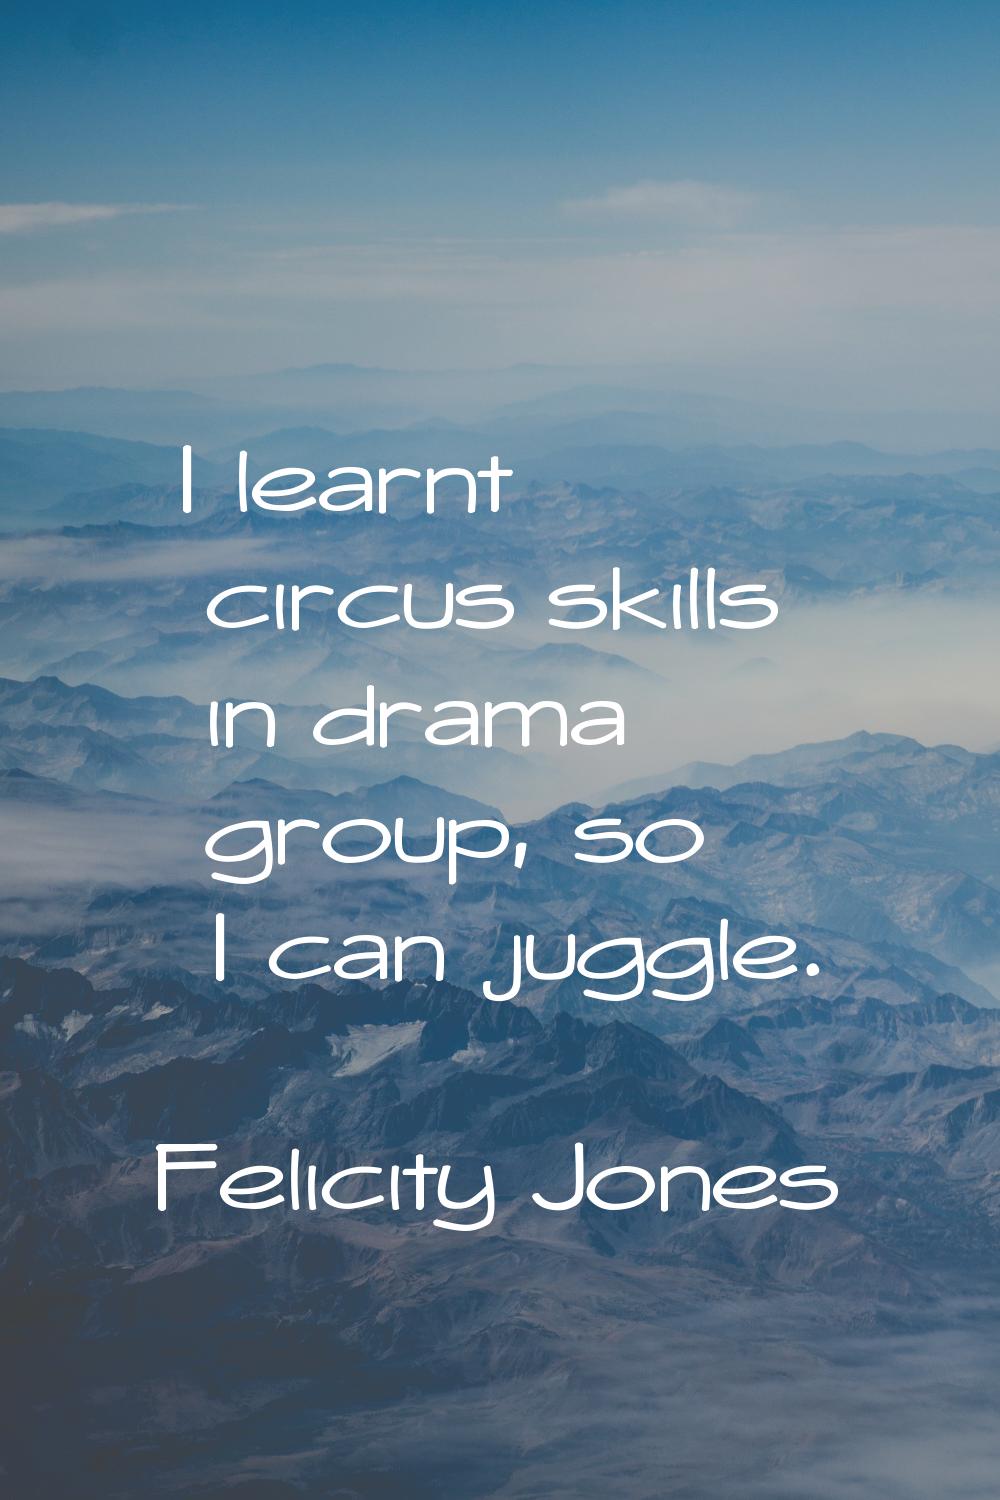 I learnt circus skills in drama group, so I can juggle.